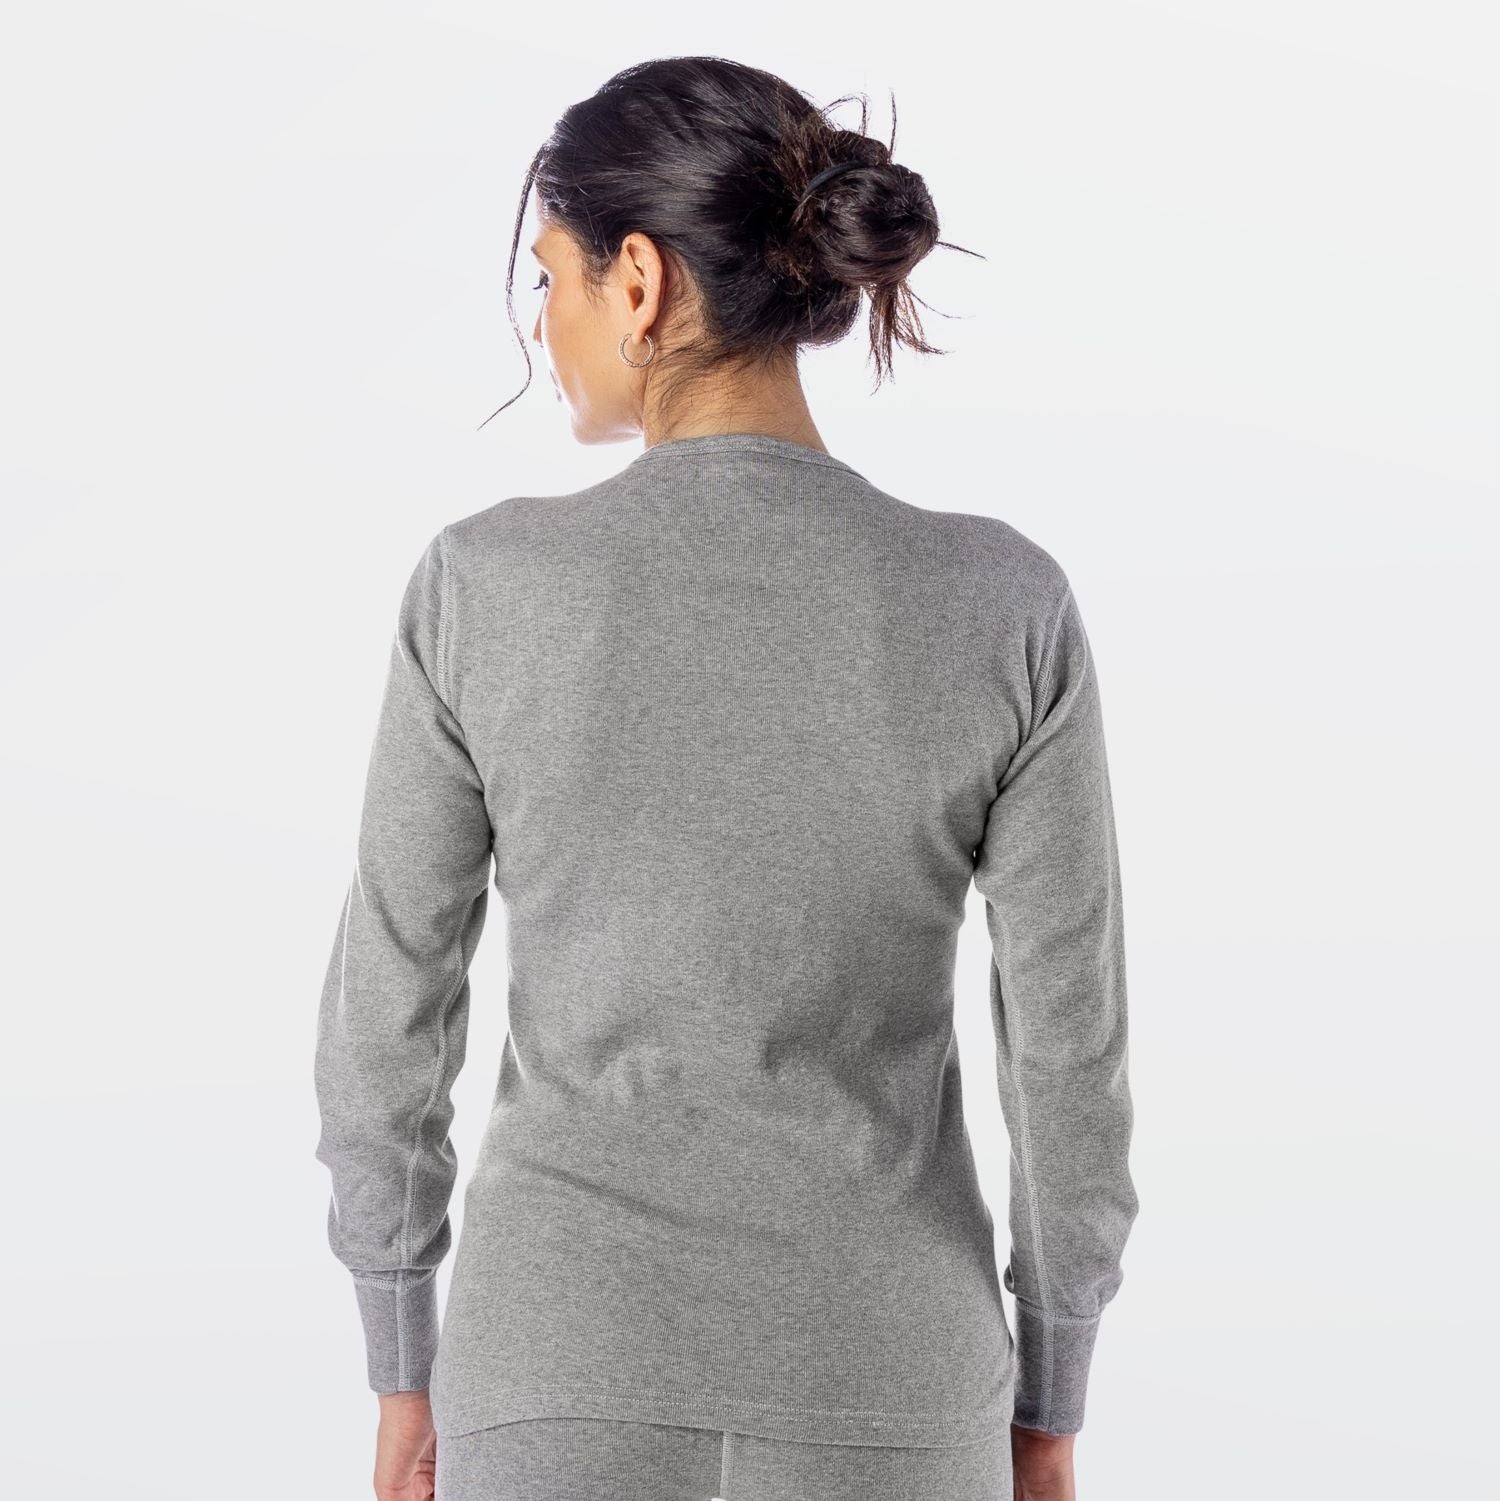 Women's Long Sleeve Base Layer (Wool Blend)